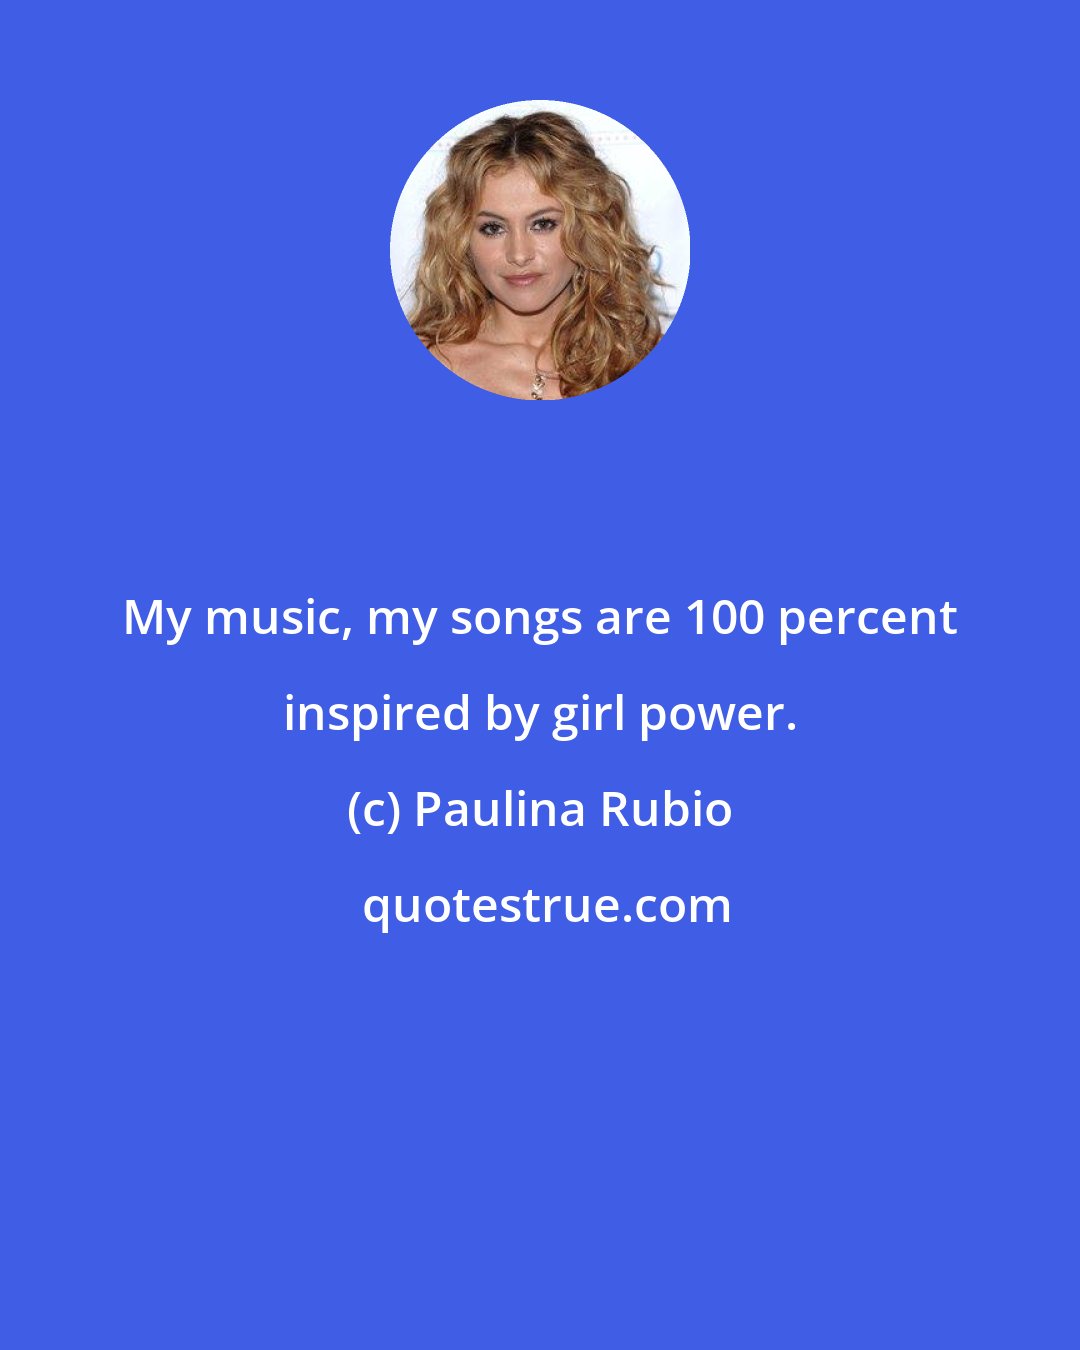 Paulina Rubio: My music, my songs are 100 percent inspired by girl power.